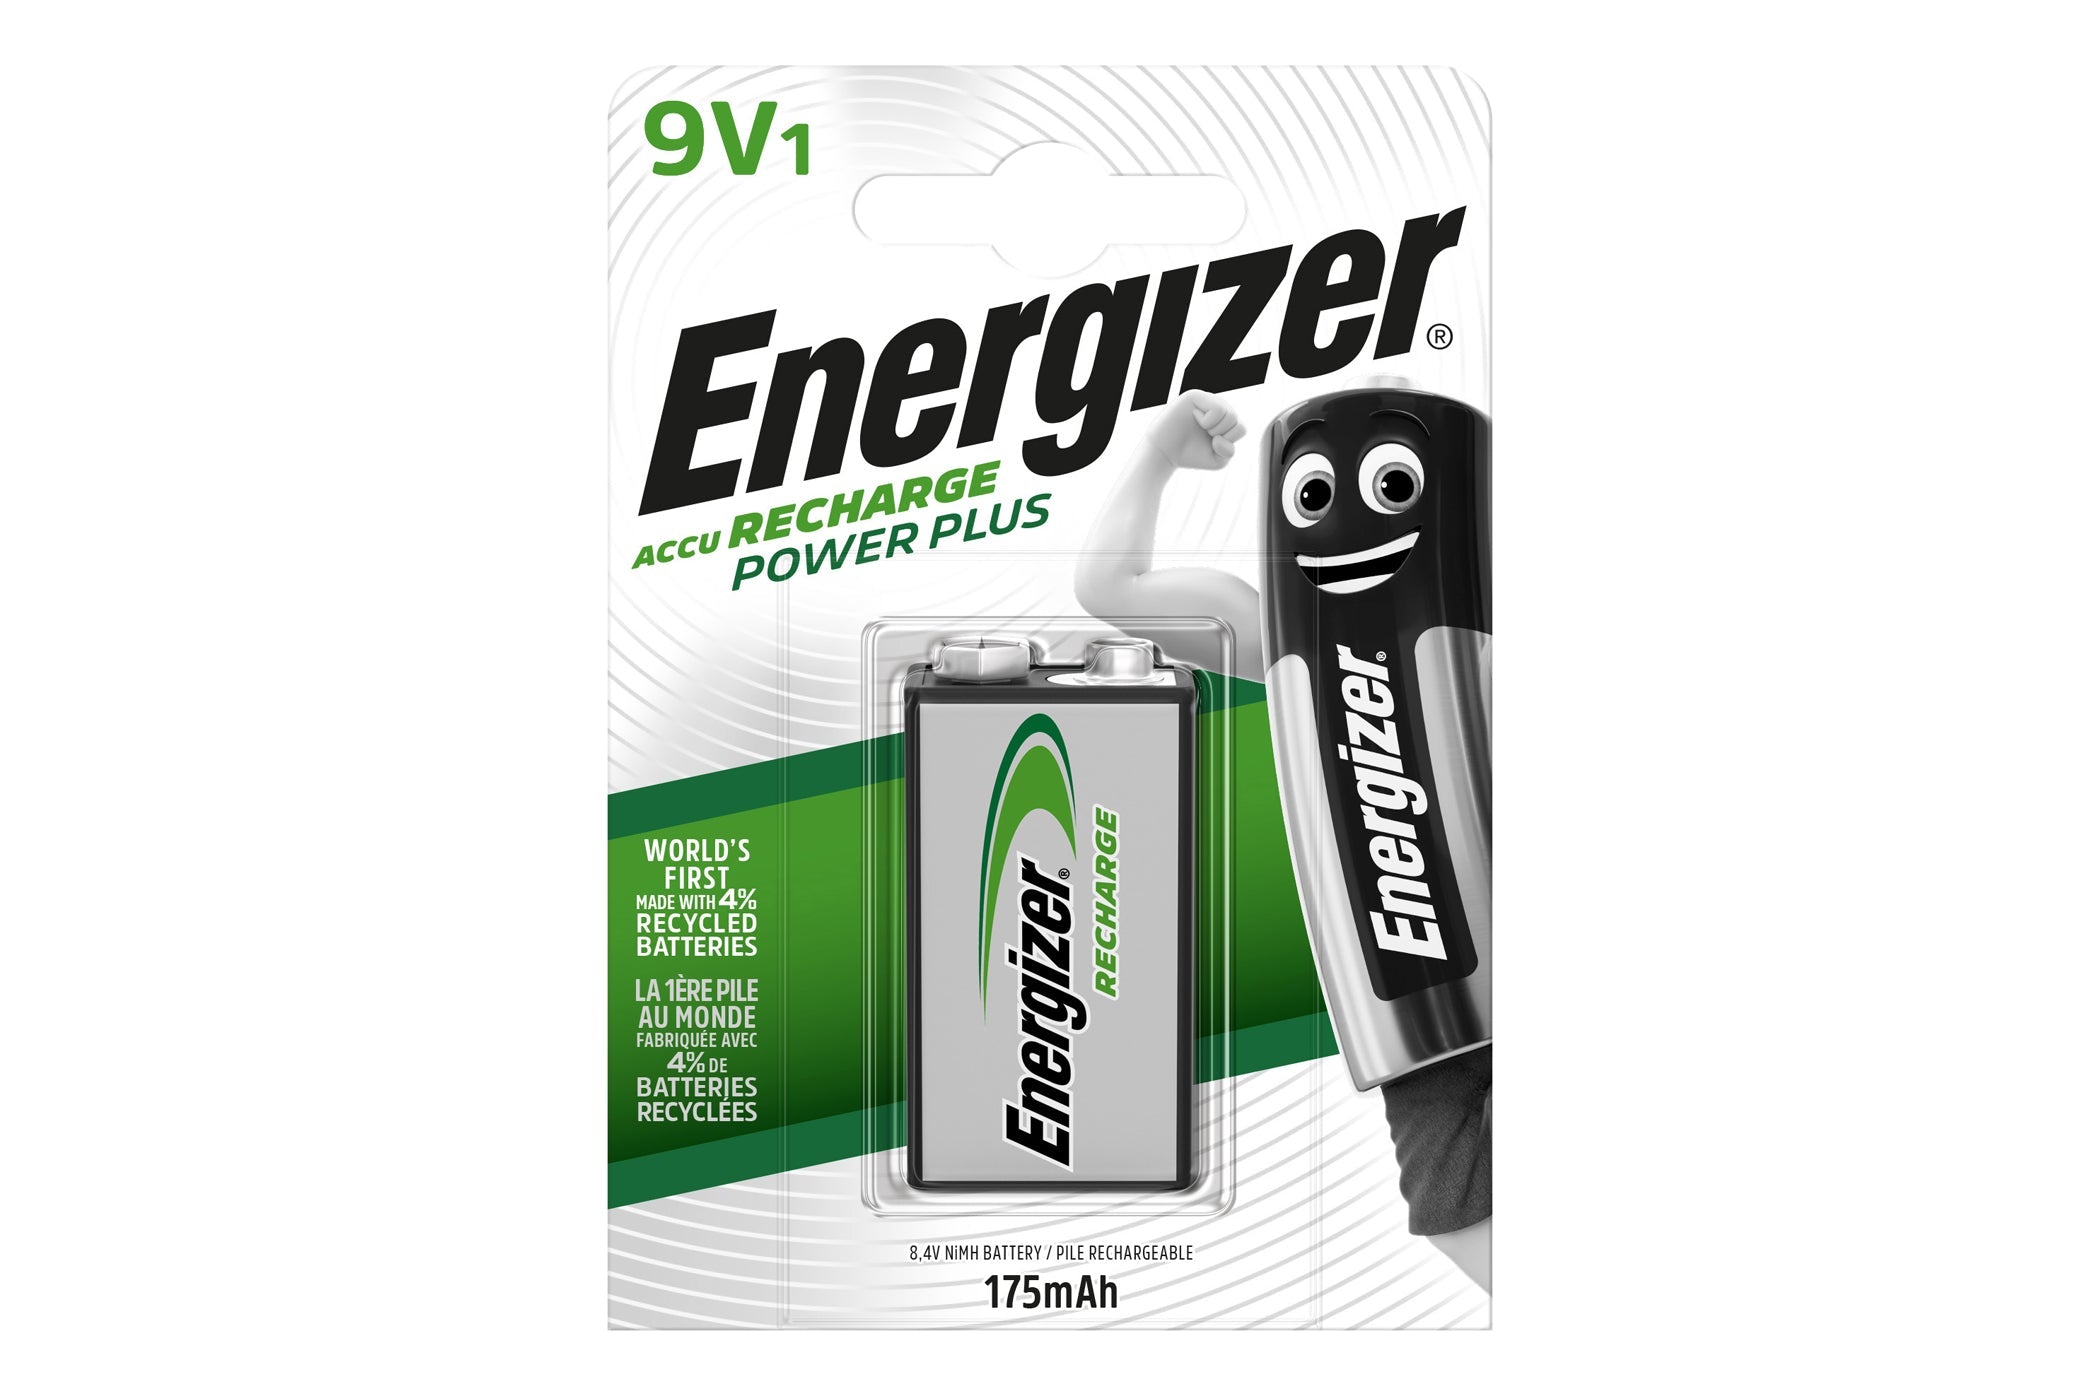 Energizer 9V 175mAh Recharge Power Plus Battery